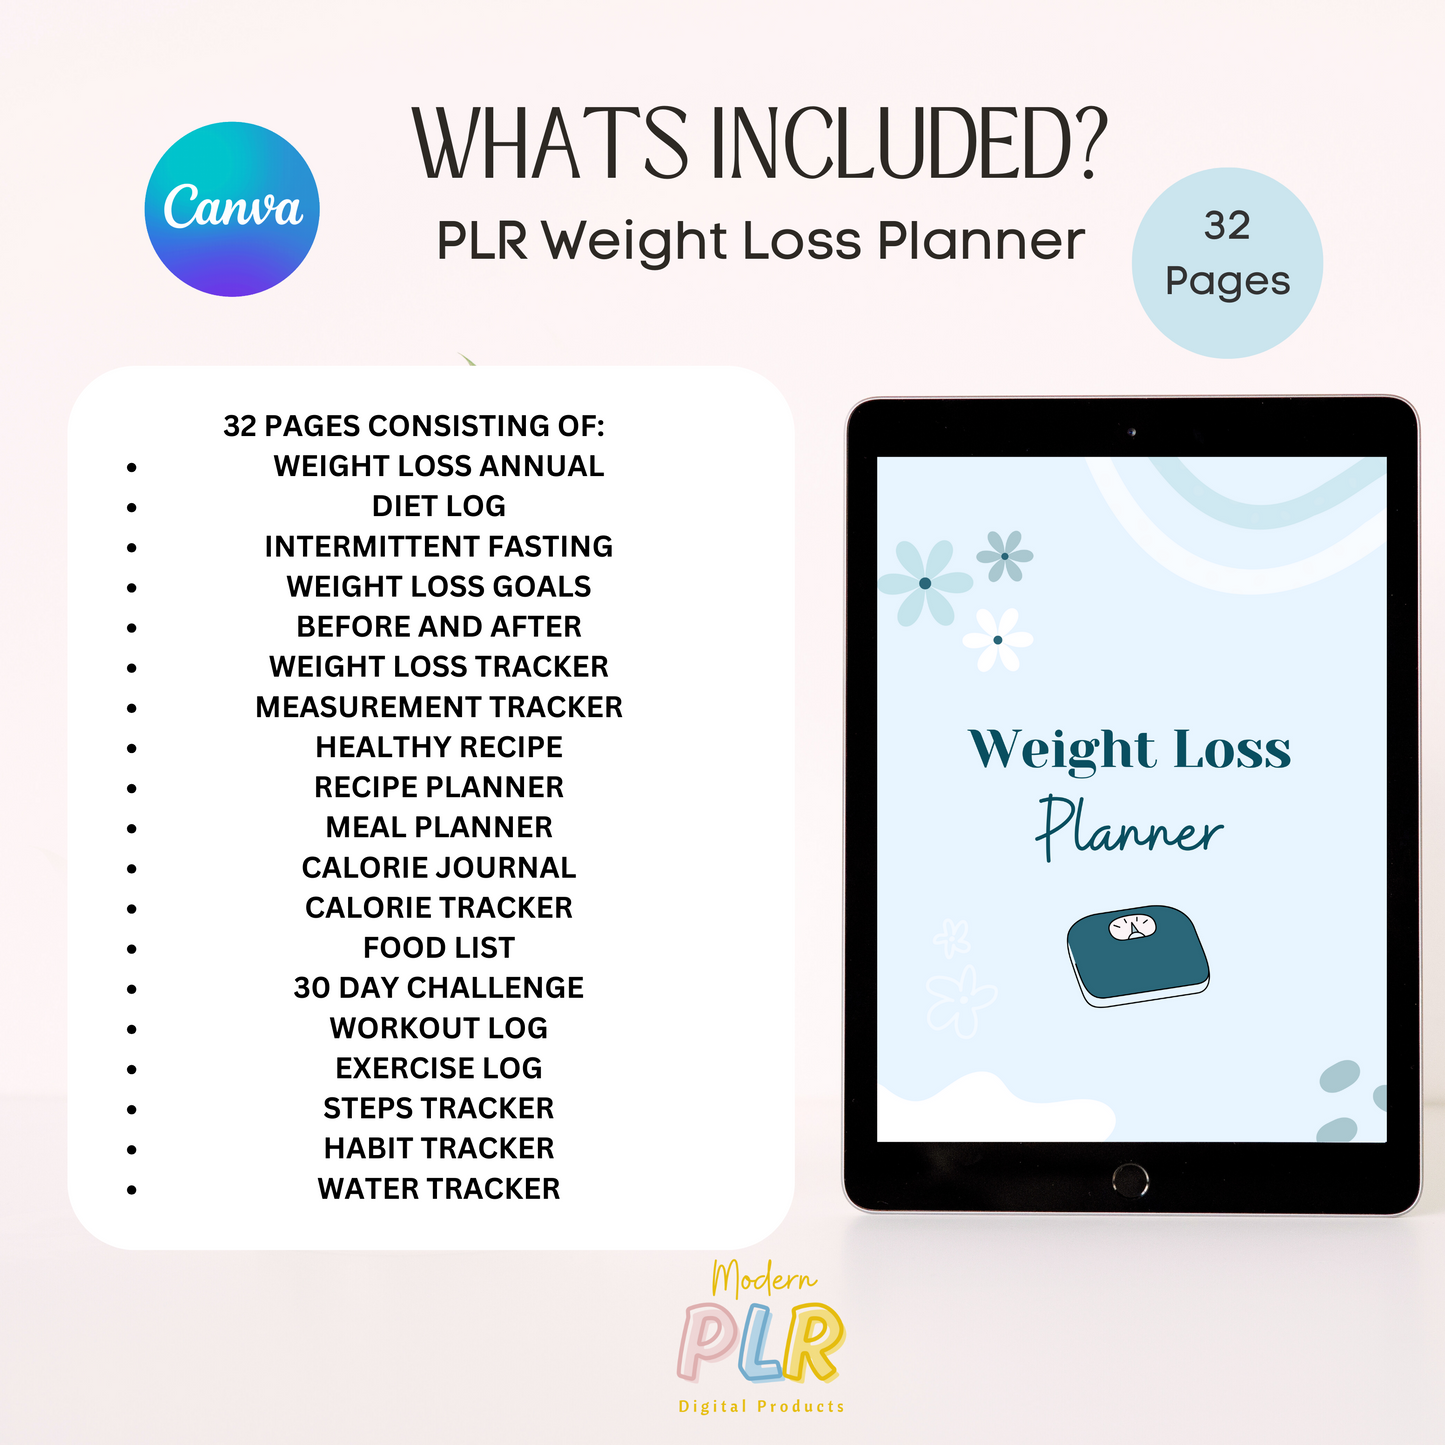 Weight Loss Planner PLR/MRR